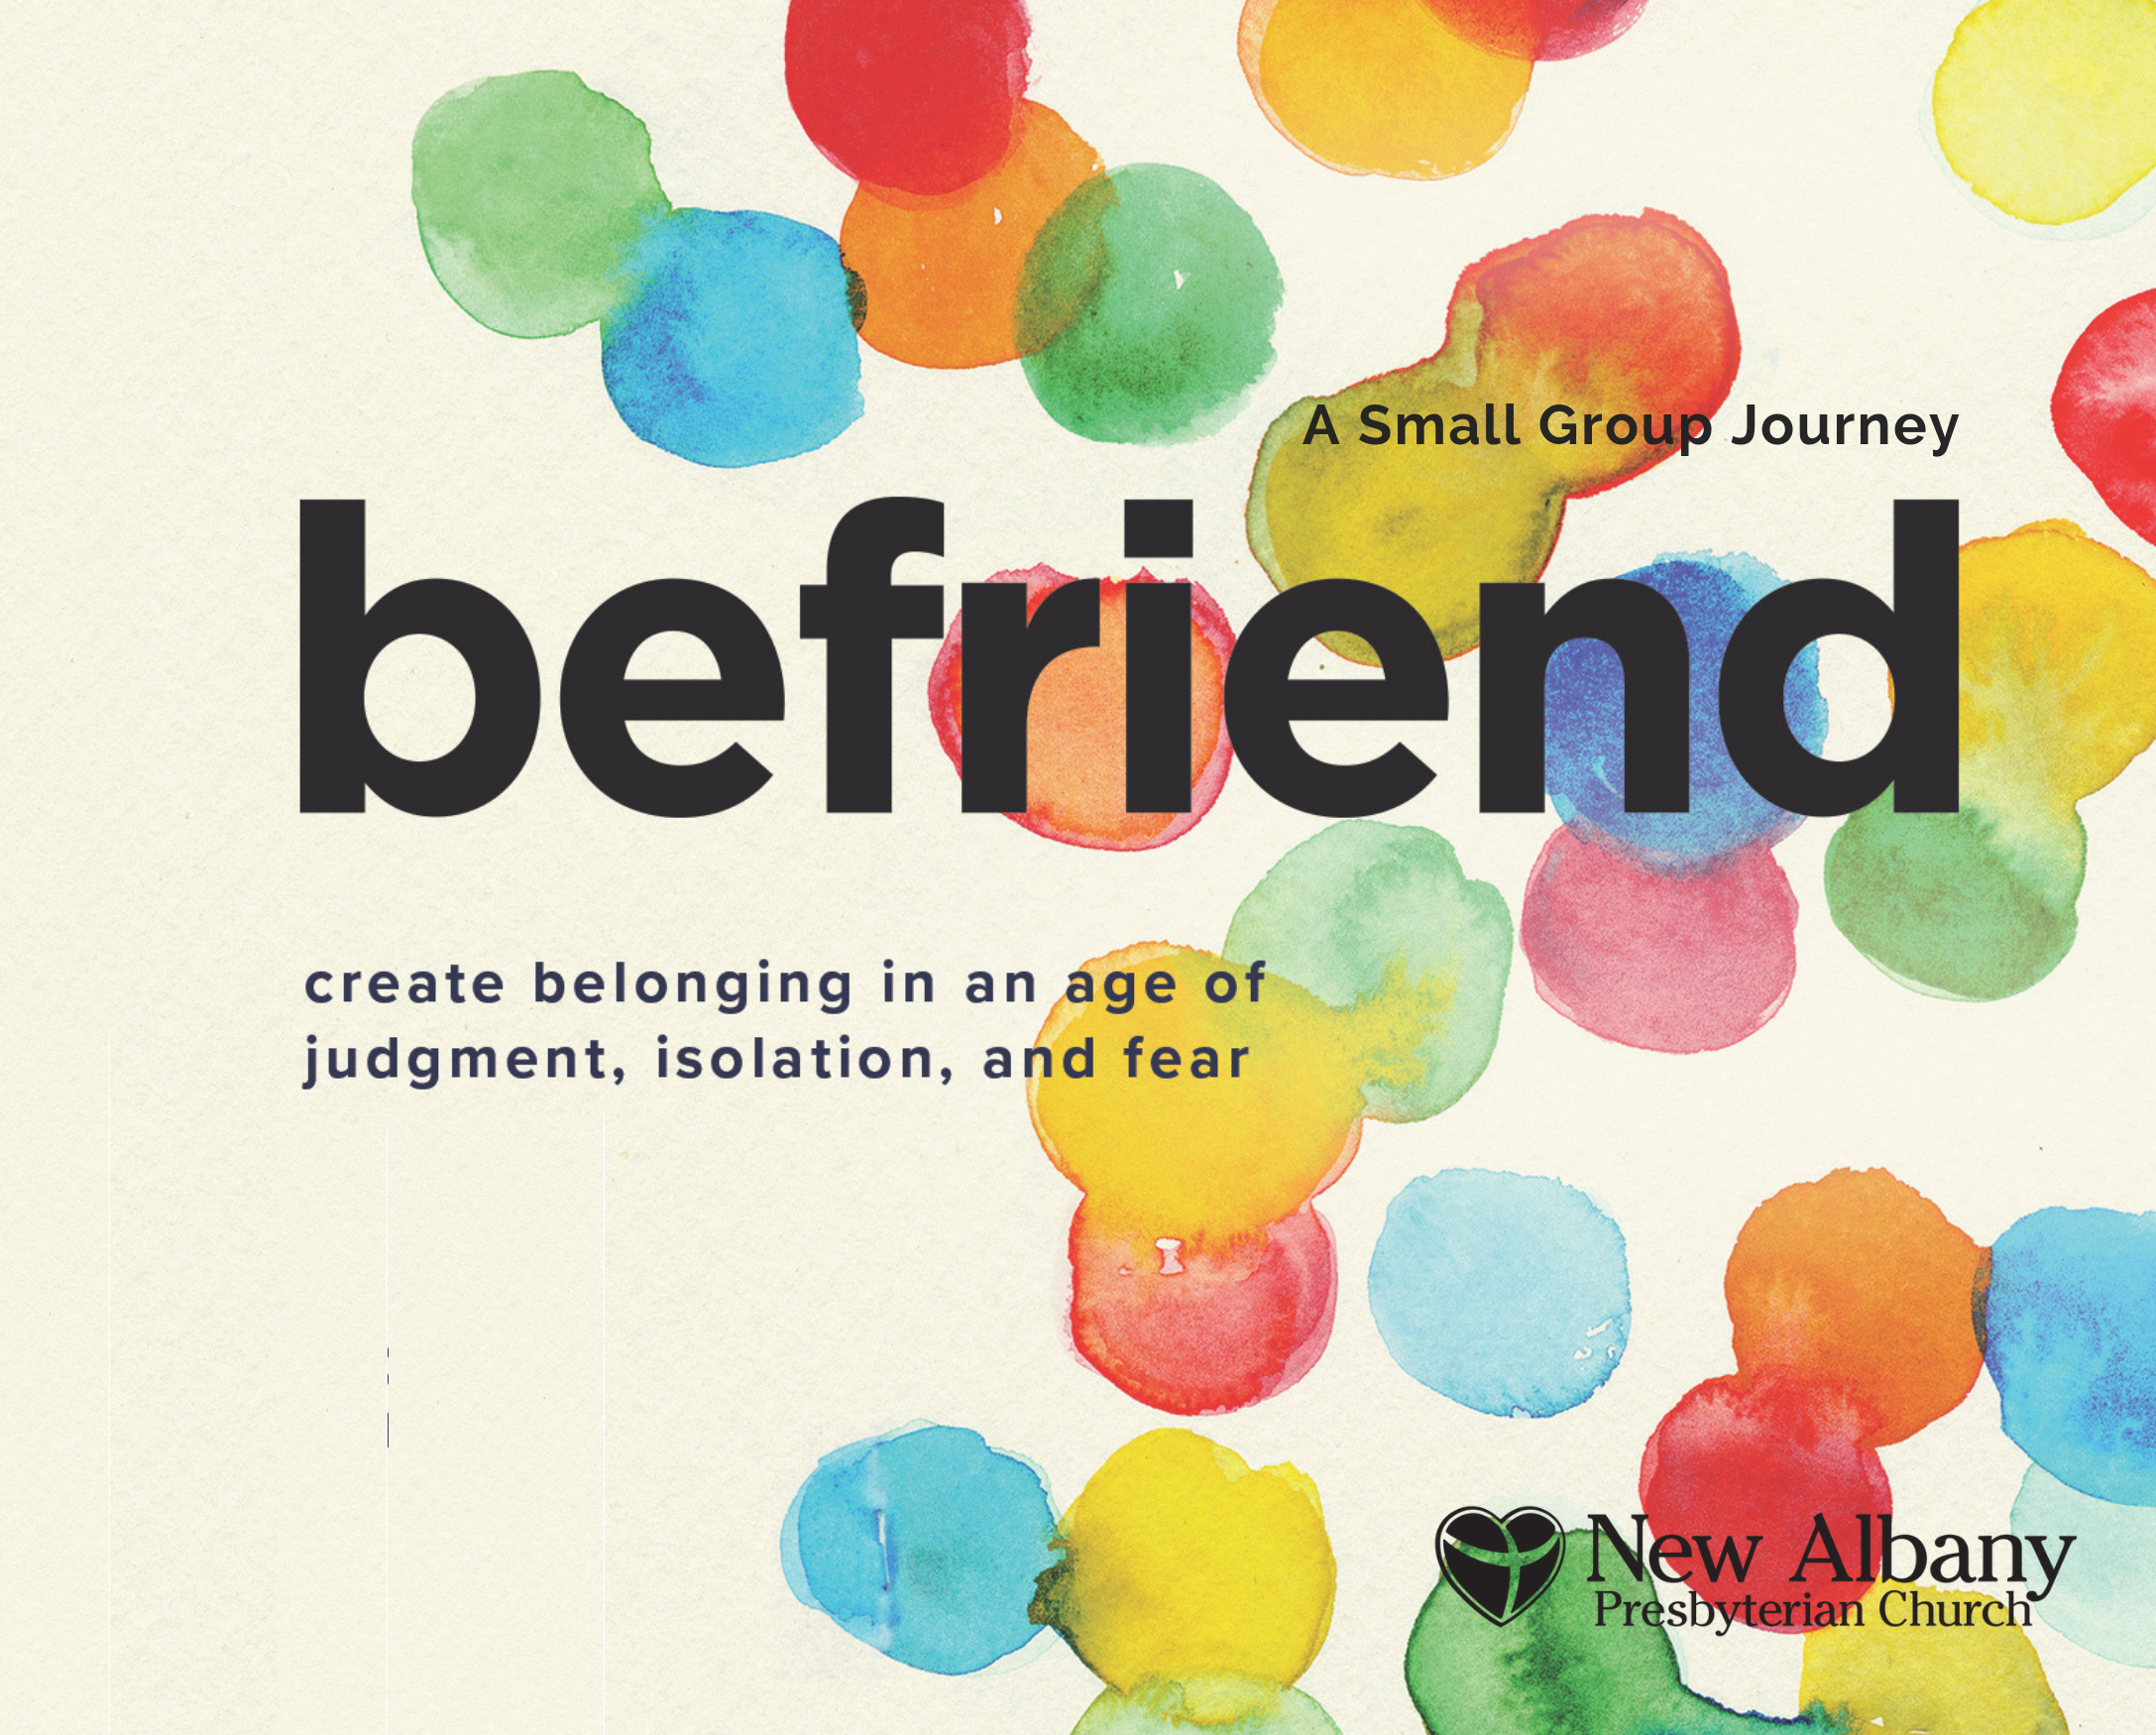 Befriend #4: Yes, them too.